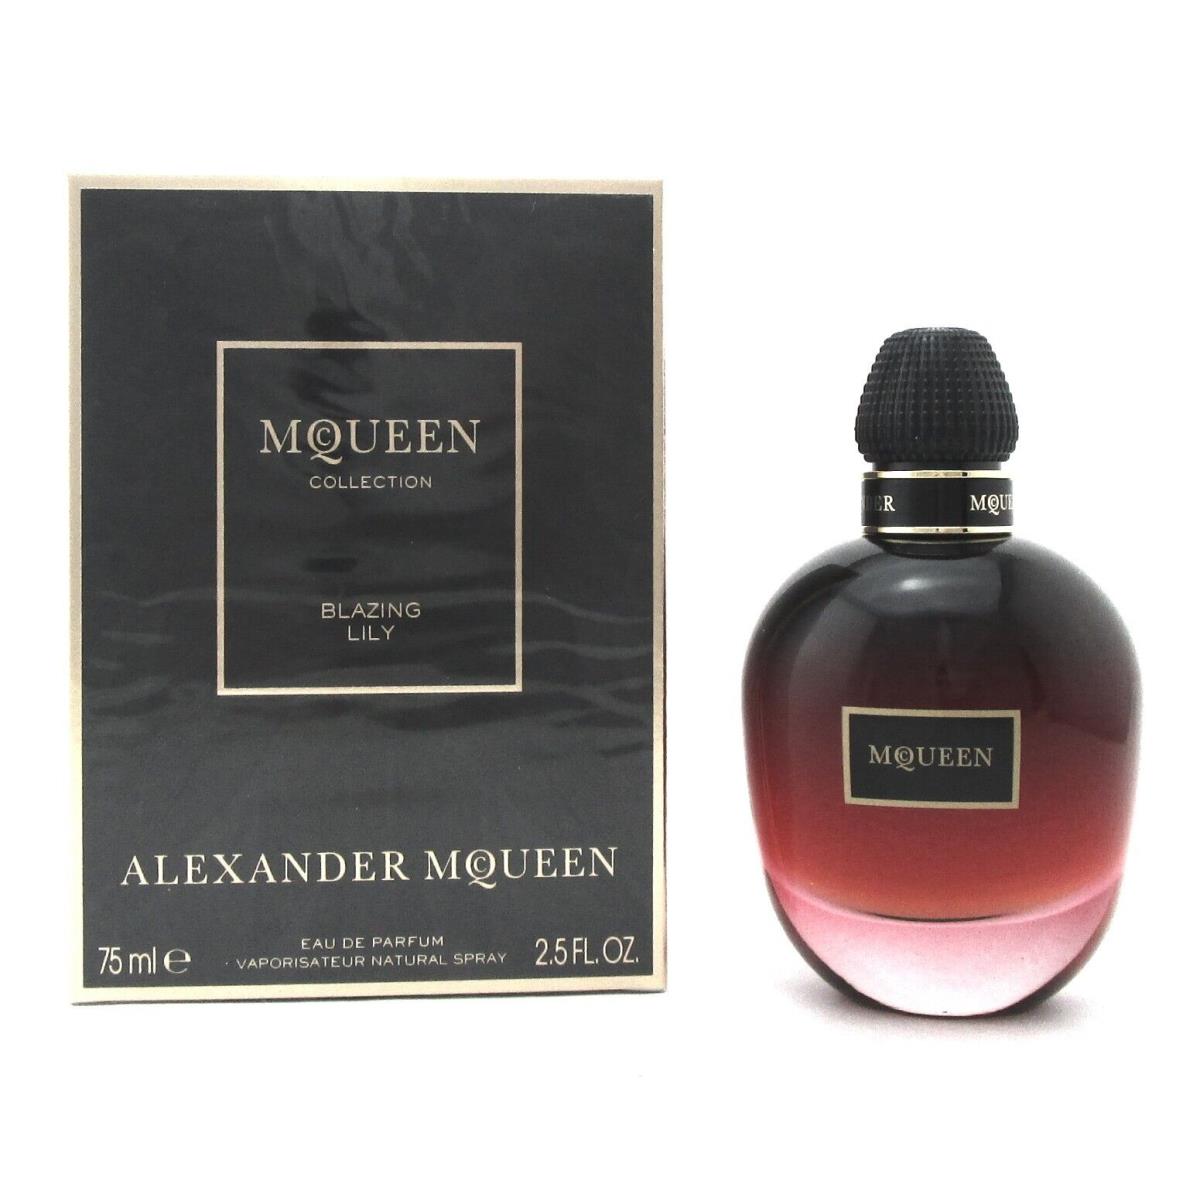 Mcqueen Collection Blazing Lily 2.5 Oz. Eau de Parfum Spray For Women Box